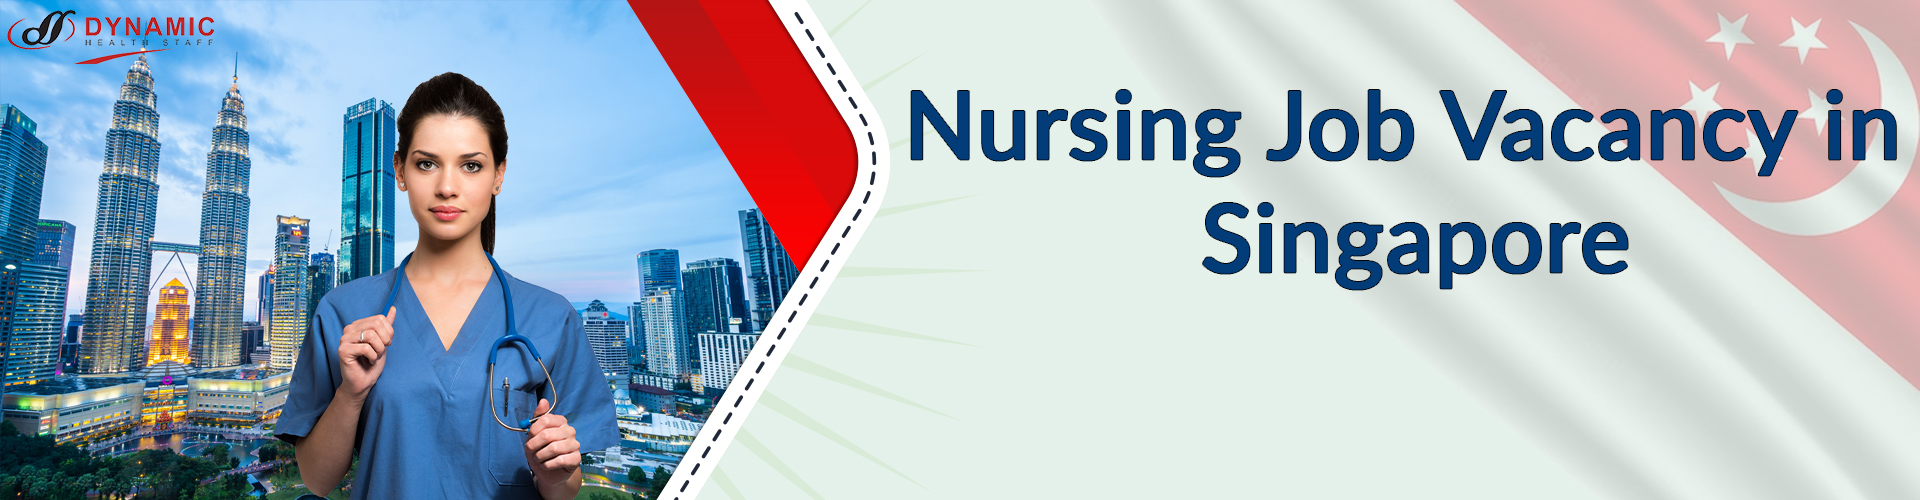 Nursing Job Vacancy in Singapore